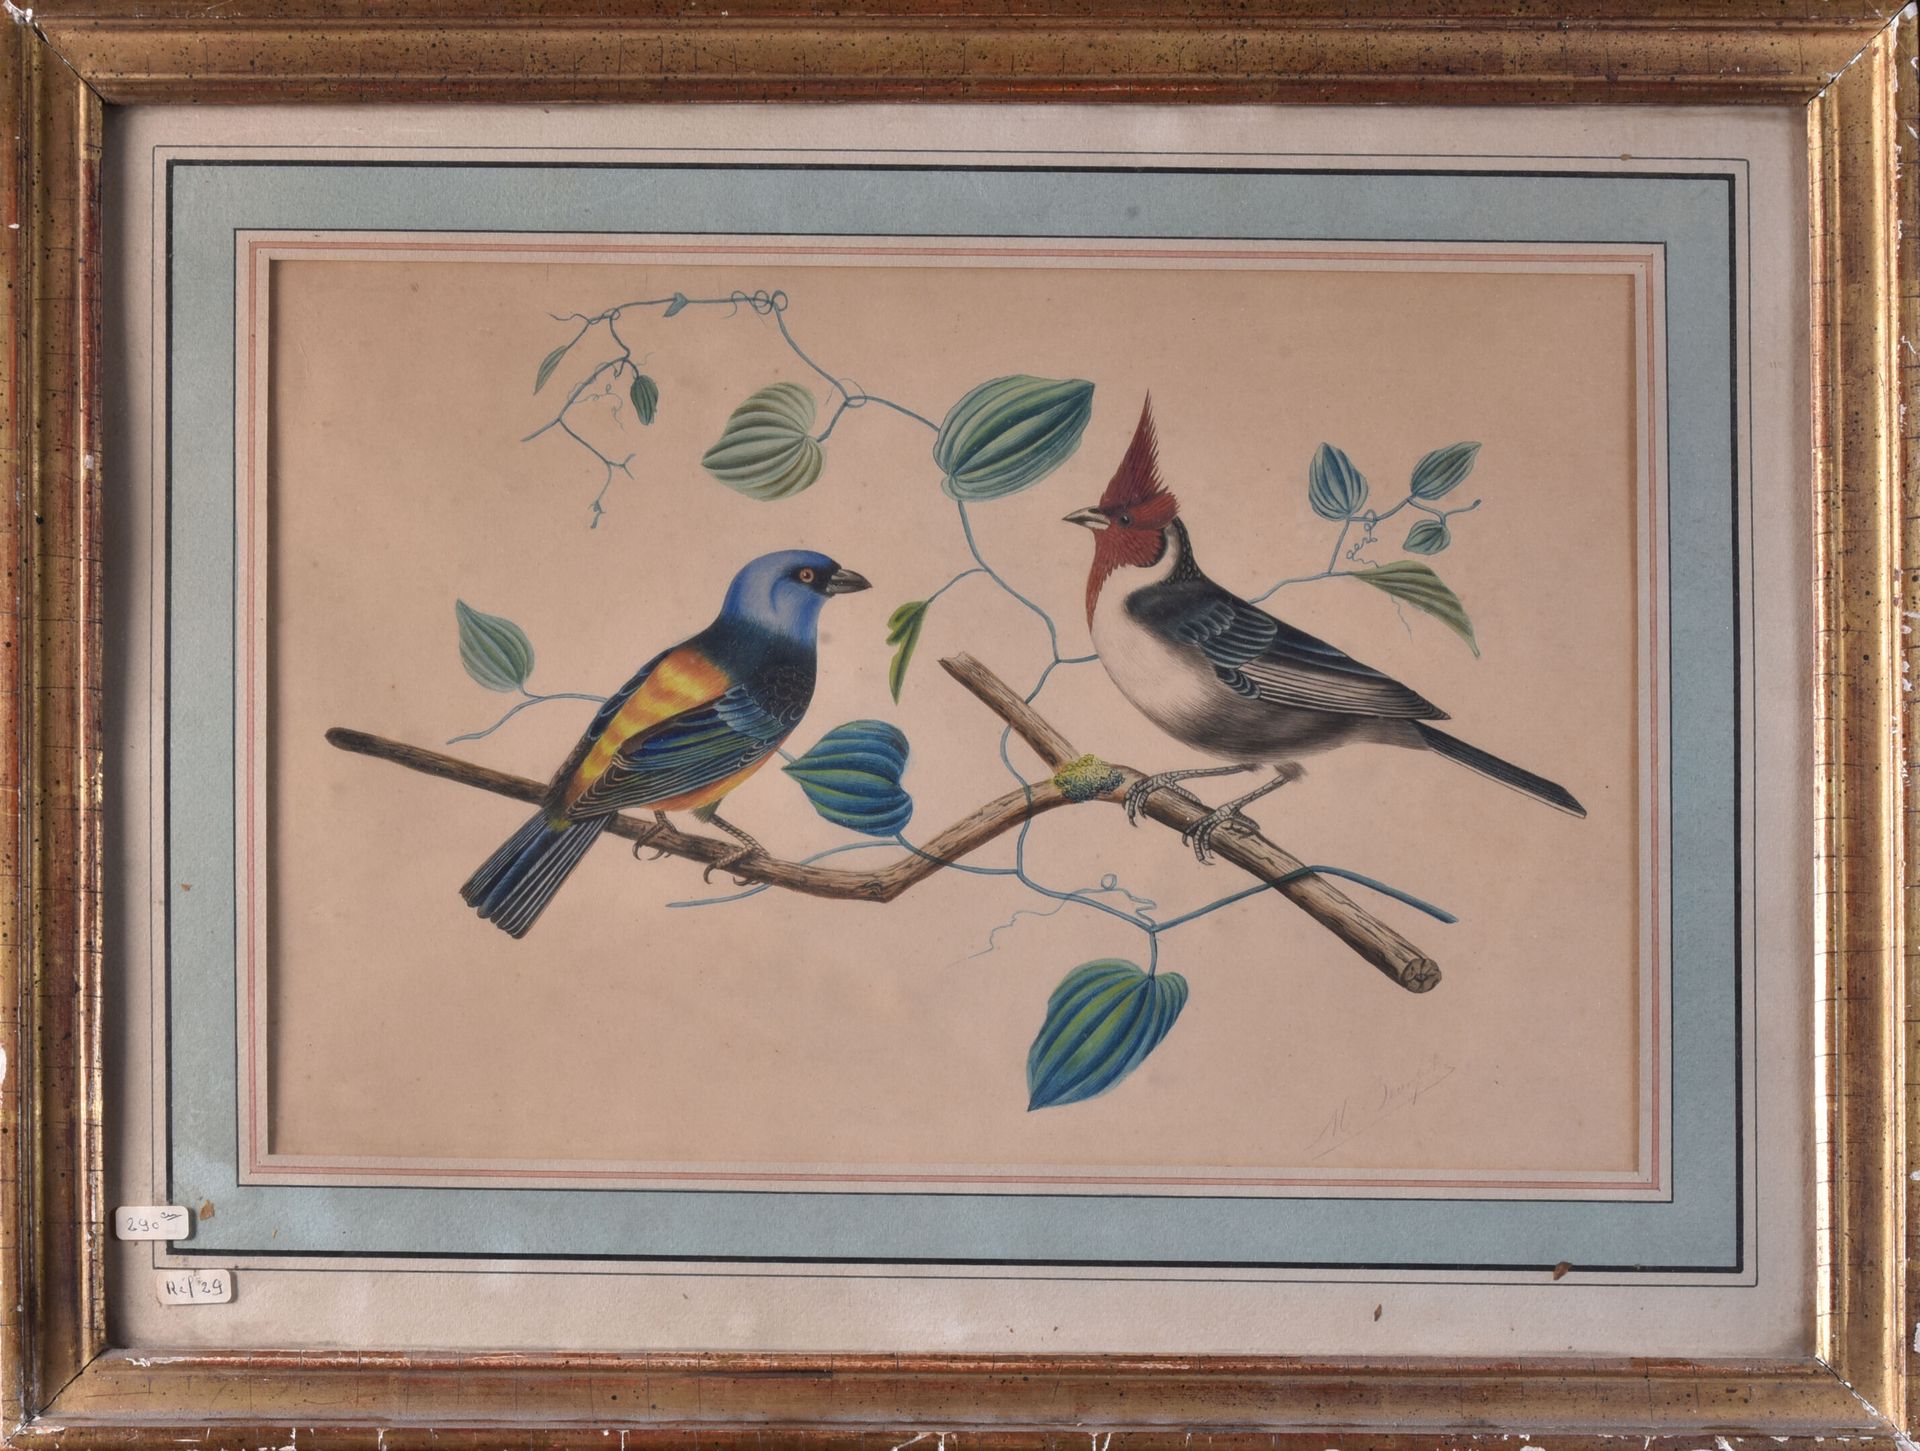 Null M. BEAUFILS (19世纪)

空气中的鸟儿

水彩画，右下角有签名

H.22.5厘米 - 宽33厘米

有轻微的凹陷